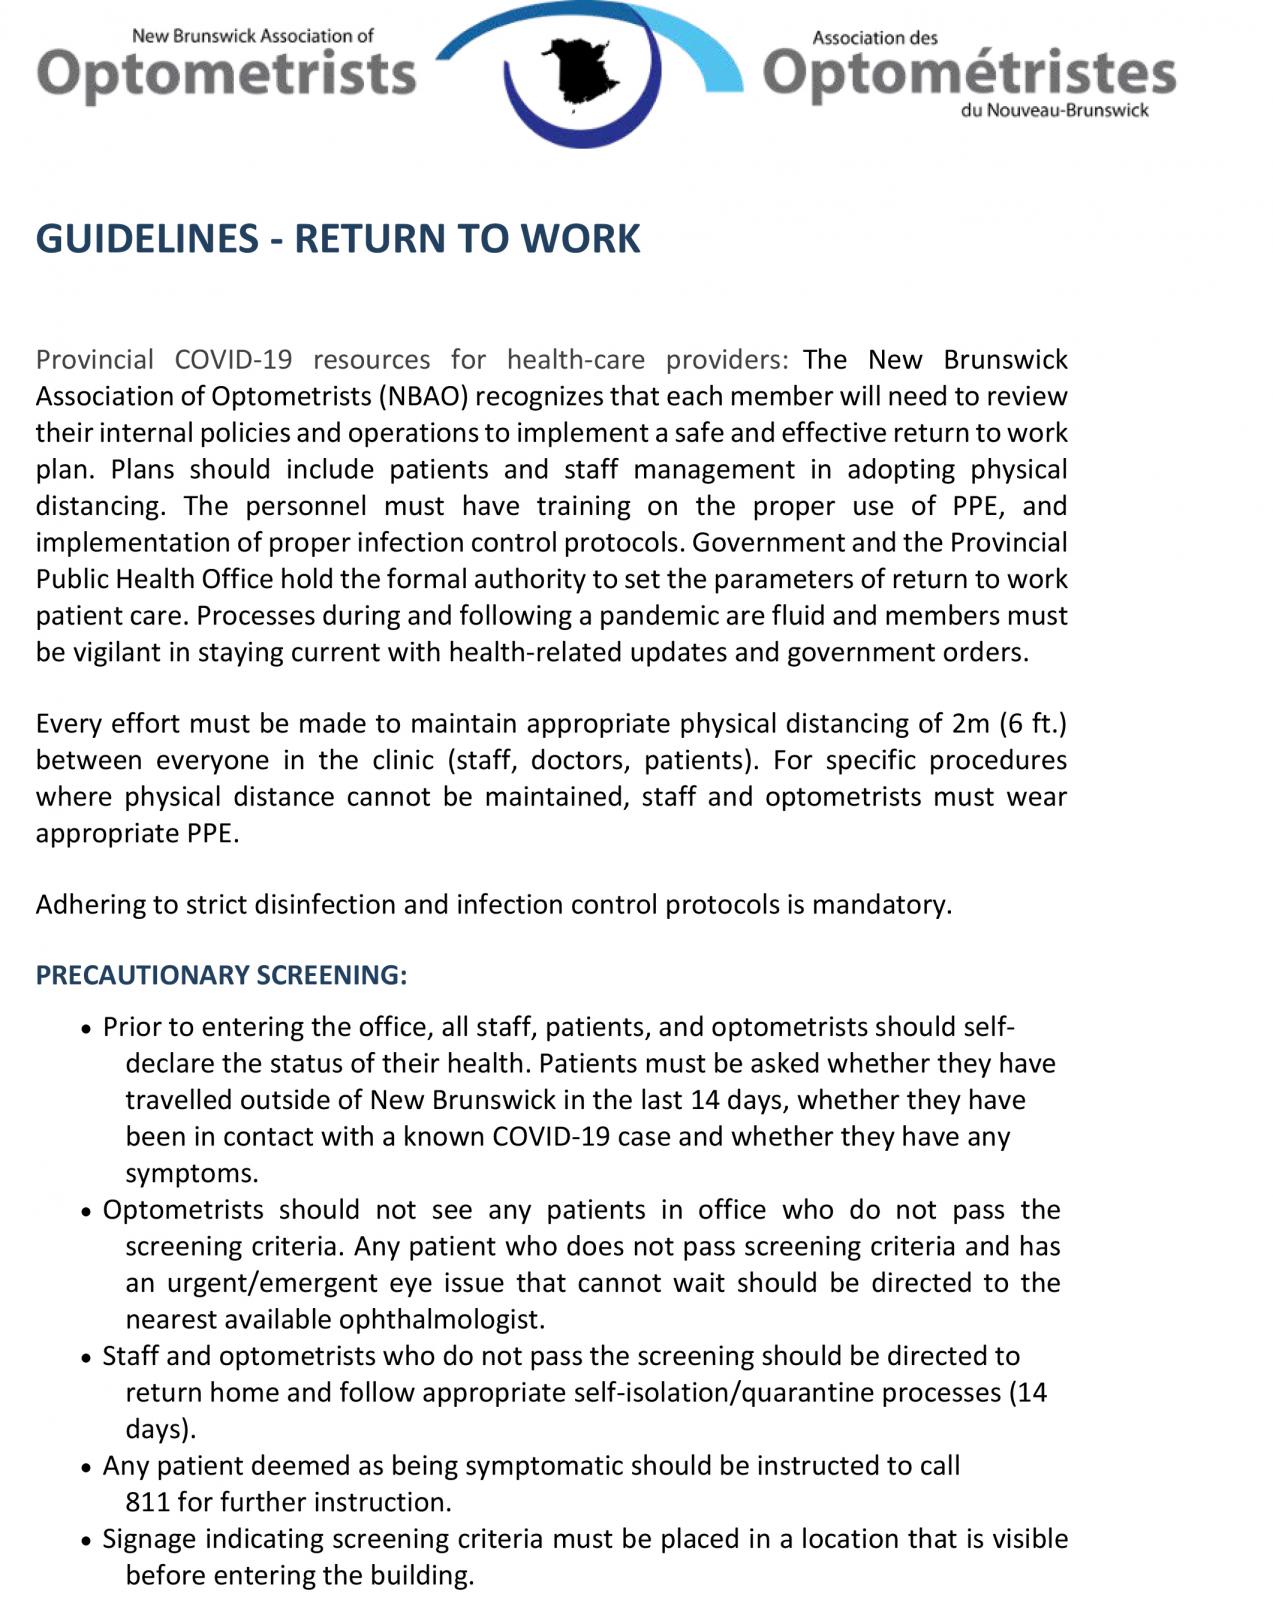  New Brunswick Guidelines - Return to Work